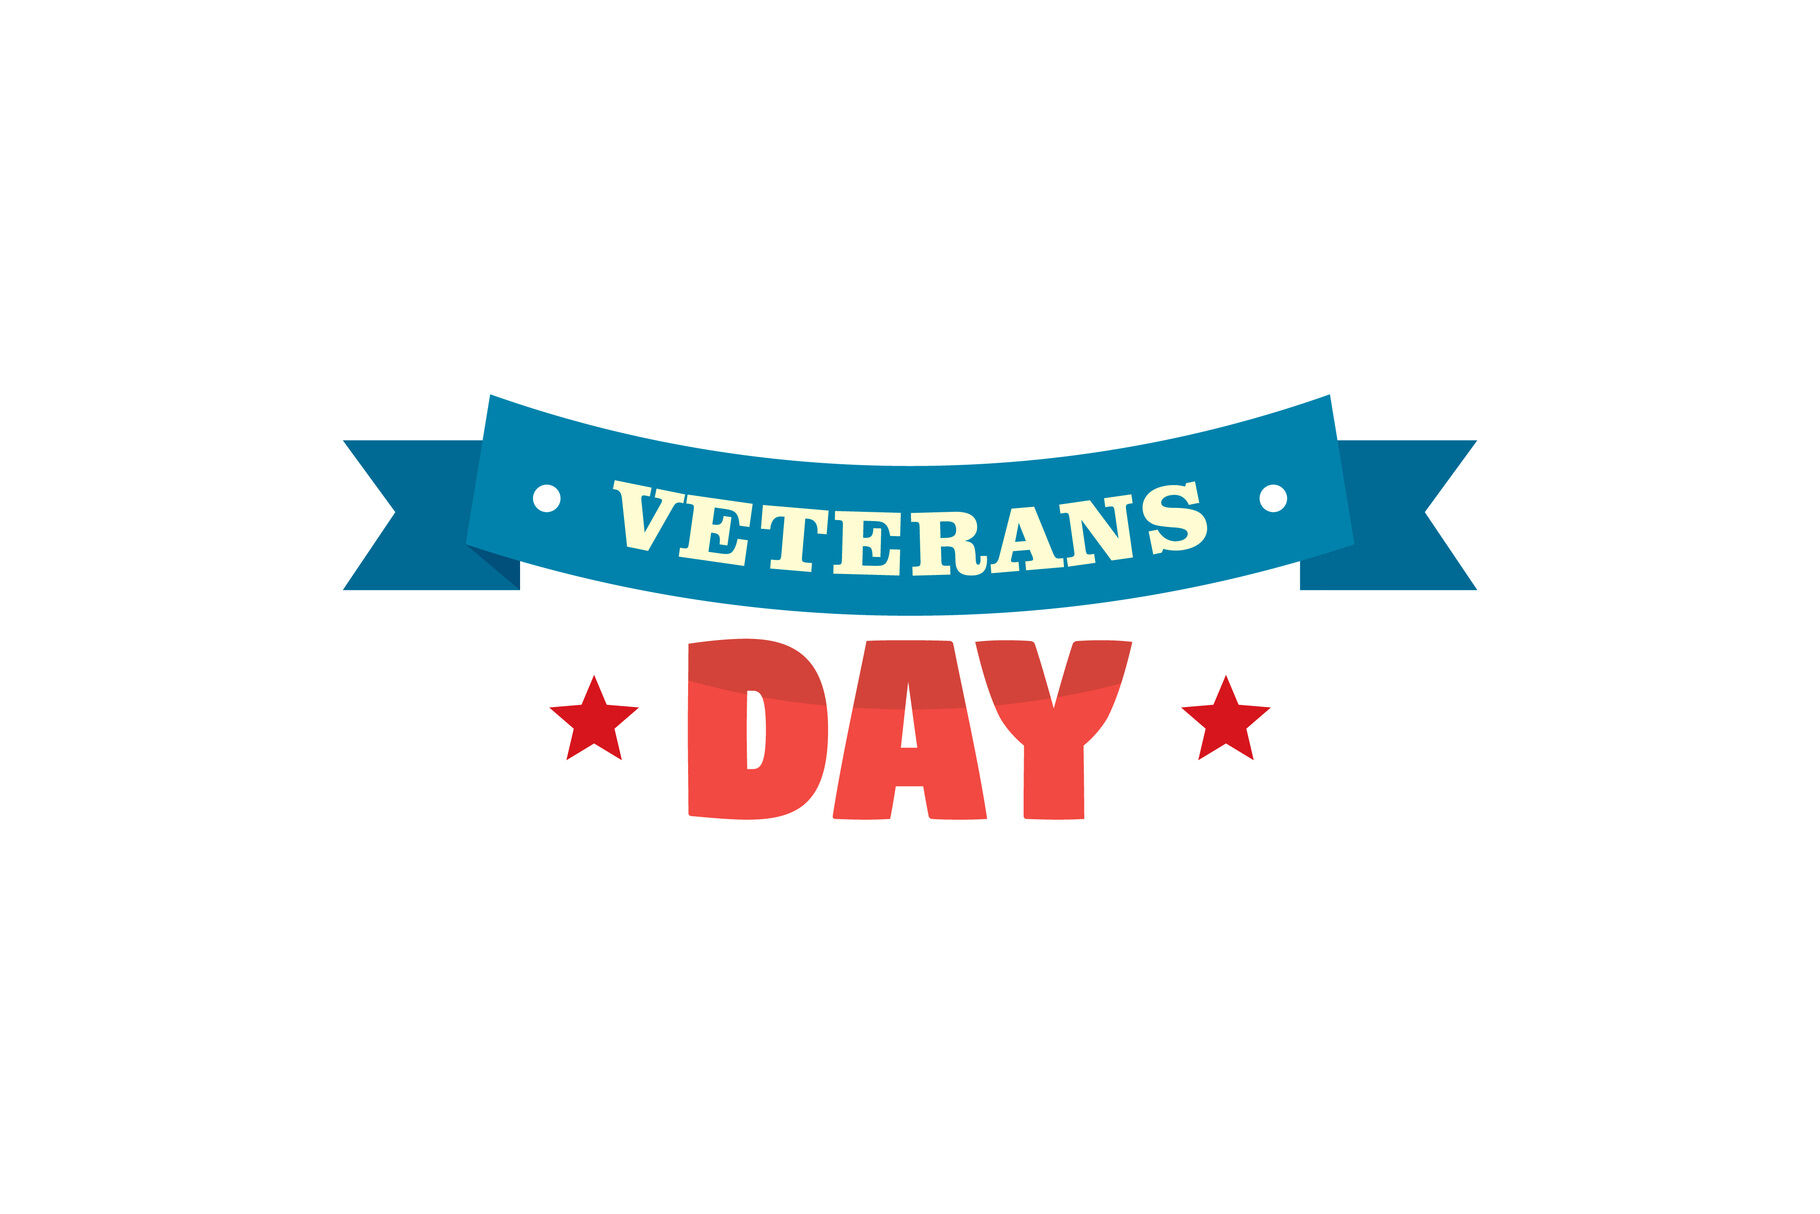 ribbon-veterans-day-logo-flat-style-by-anatolir56-thehungryjpeg